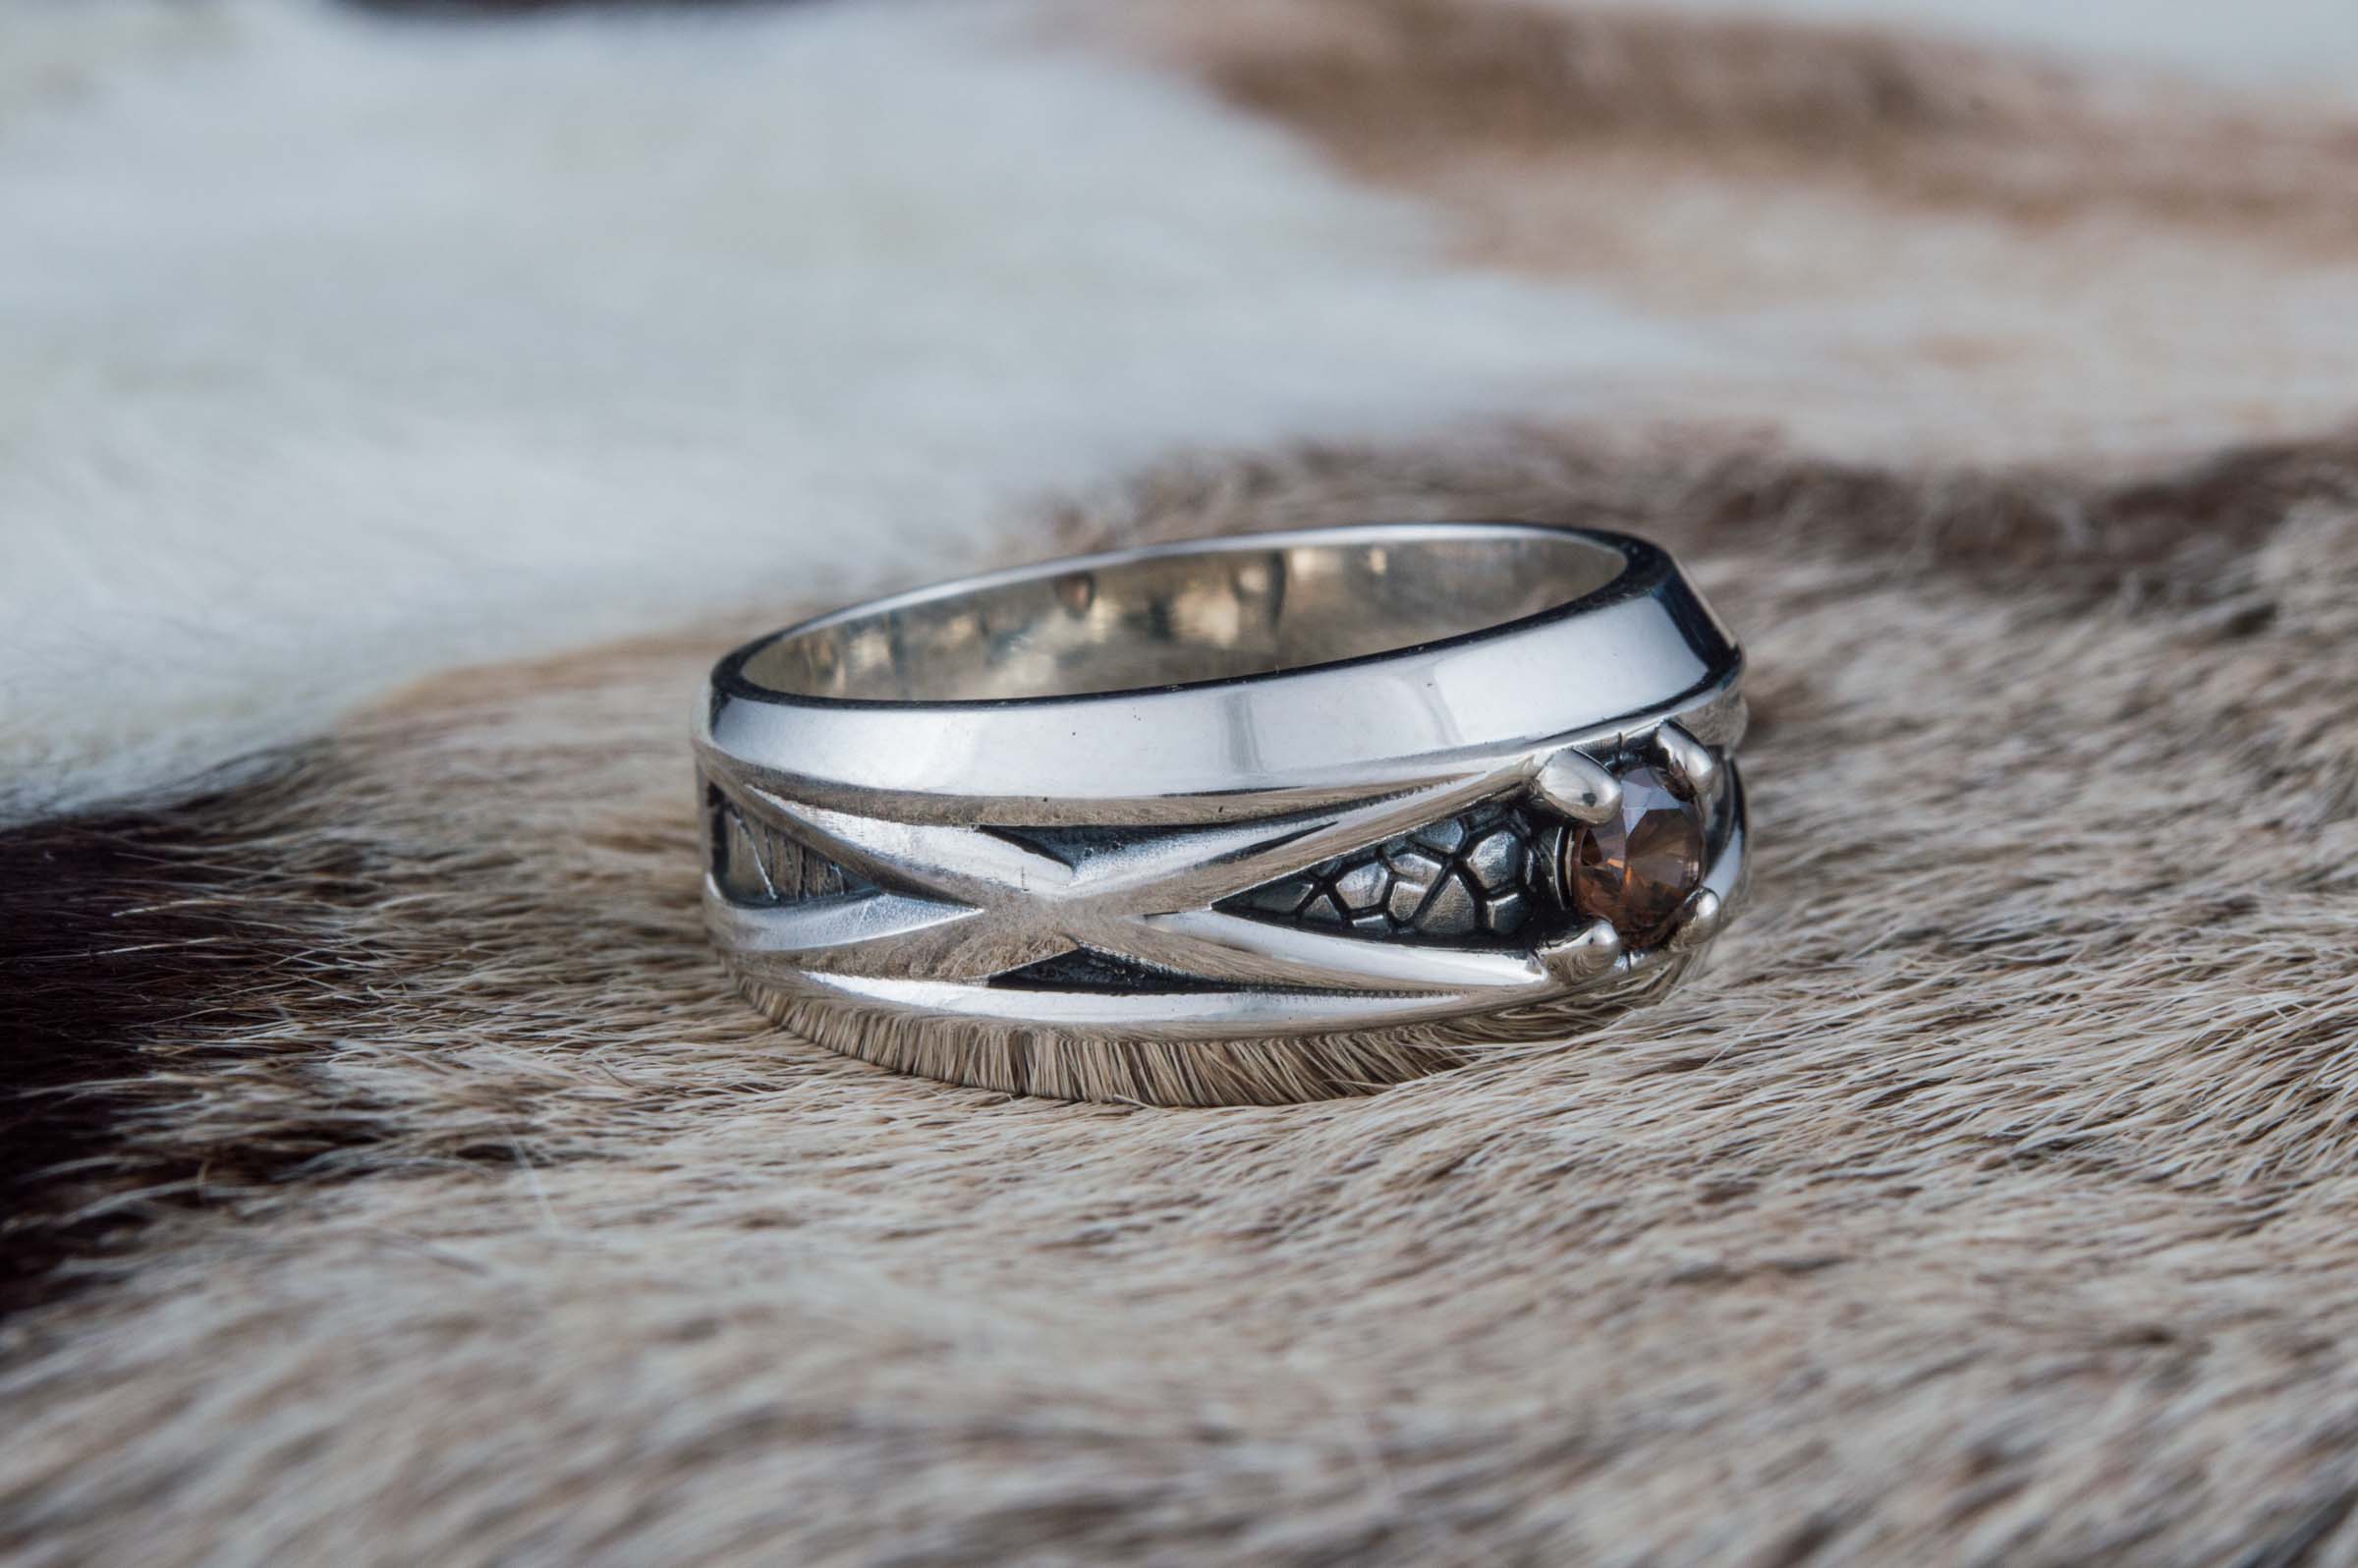 Handmade Ring with Cubic Zirconia Gem Sterling Silver Jewelry - vikingworkshop